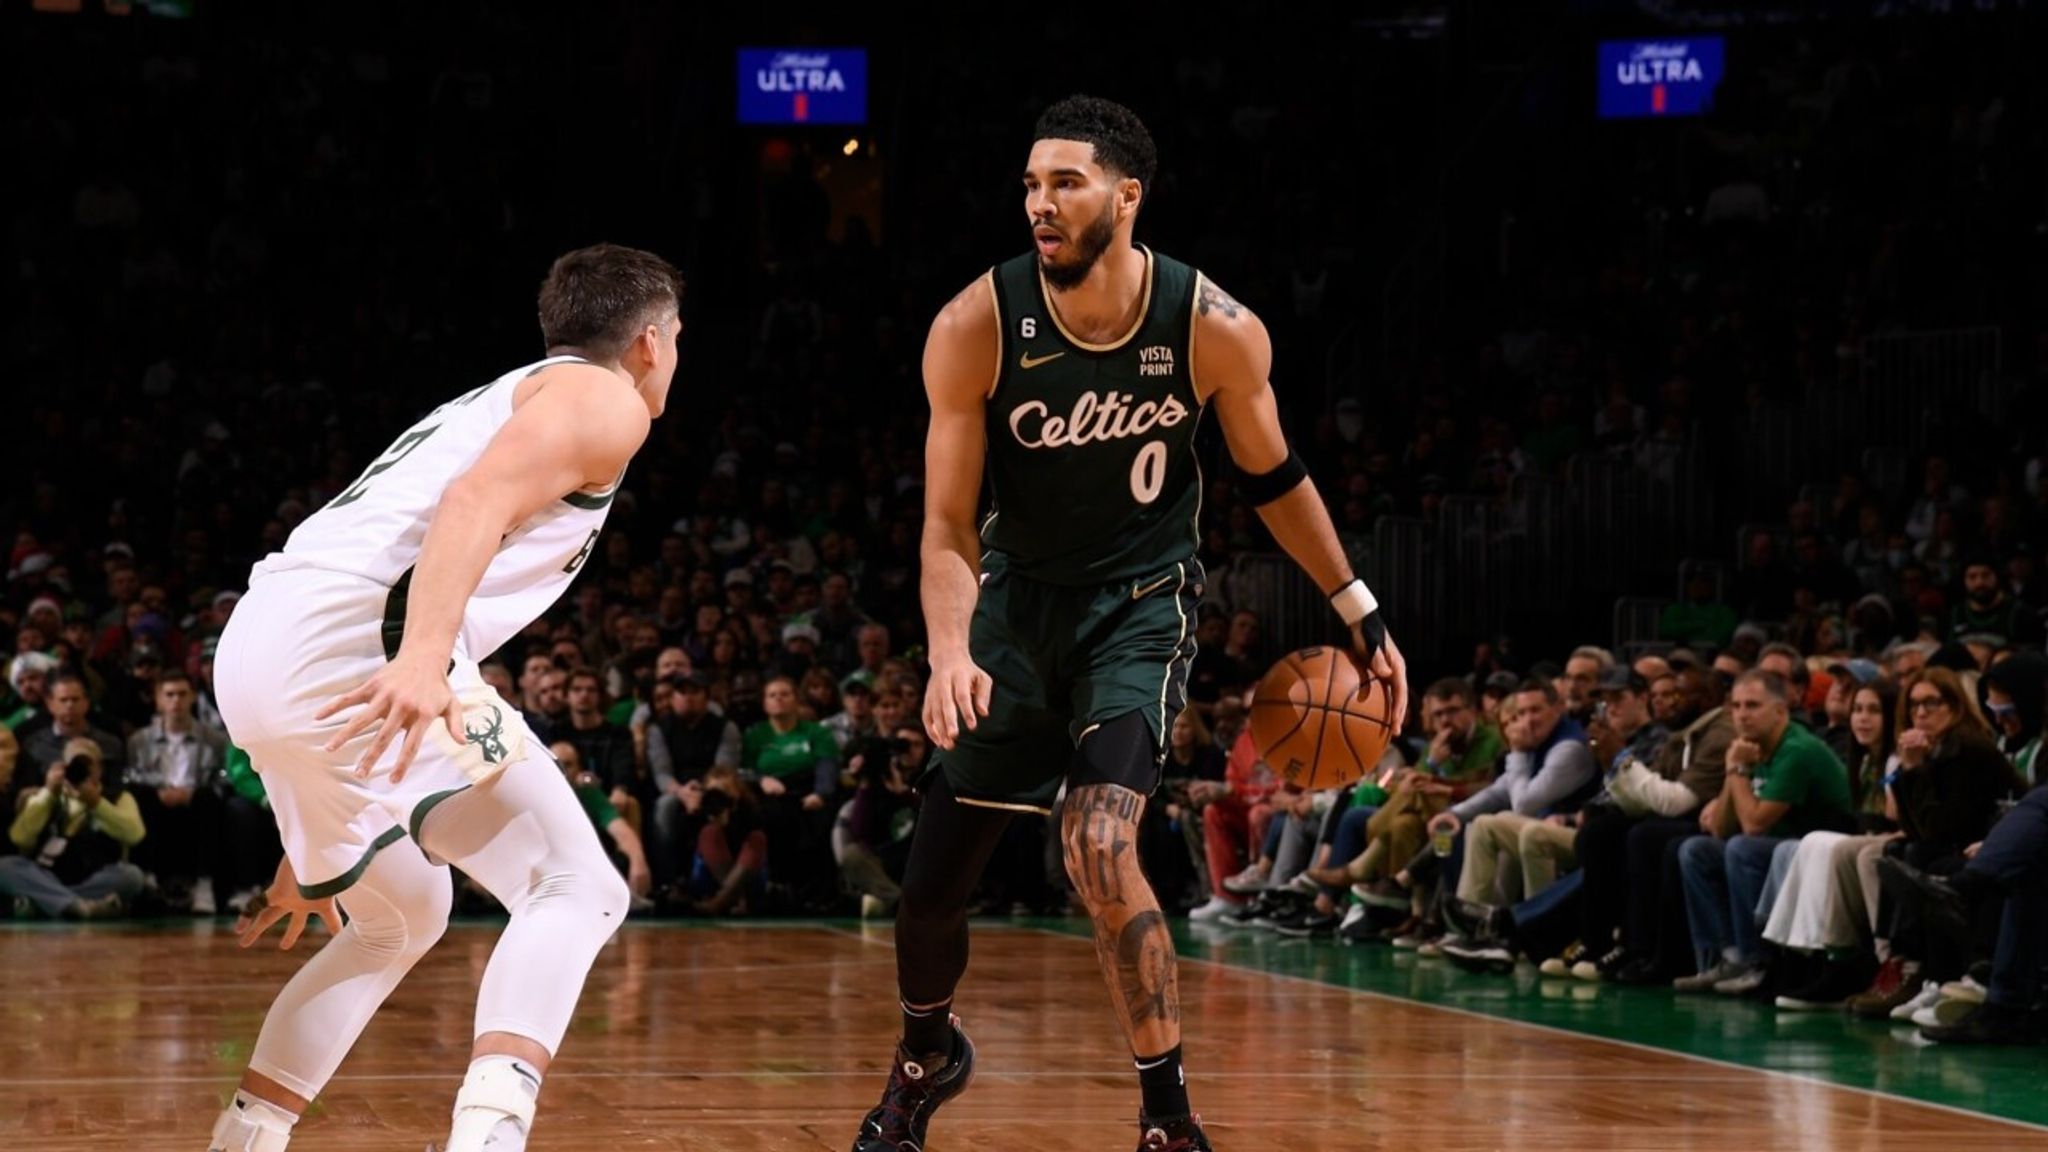 Boston Celtics on X: on to the next one 💼☘️